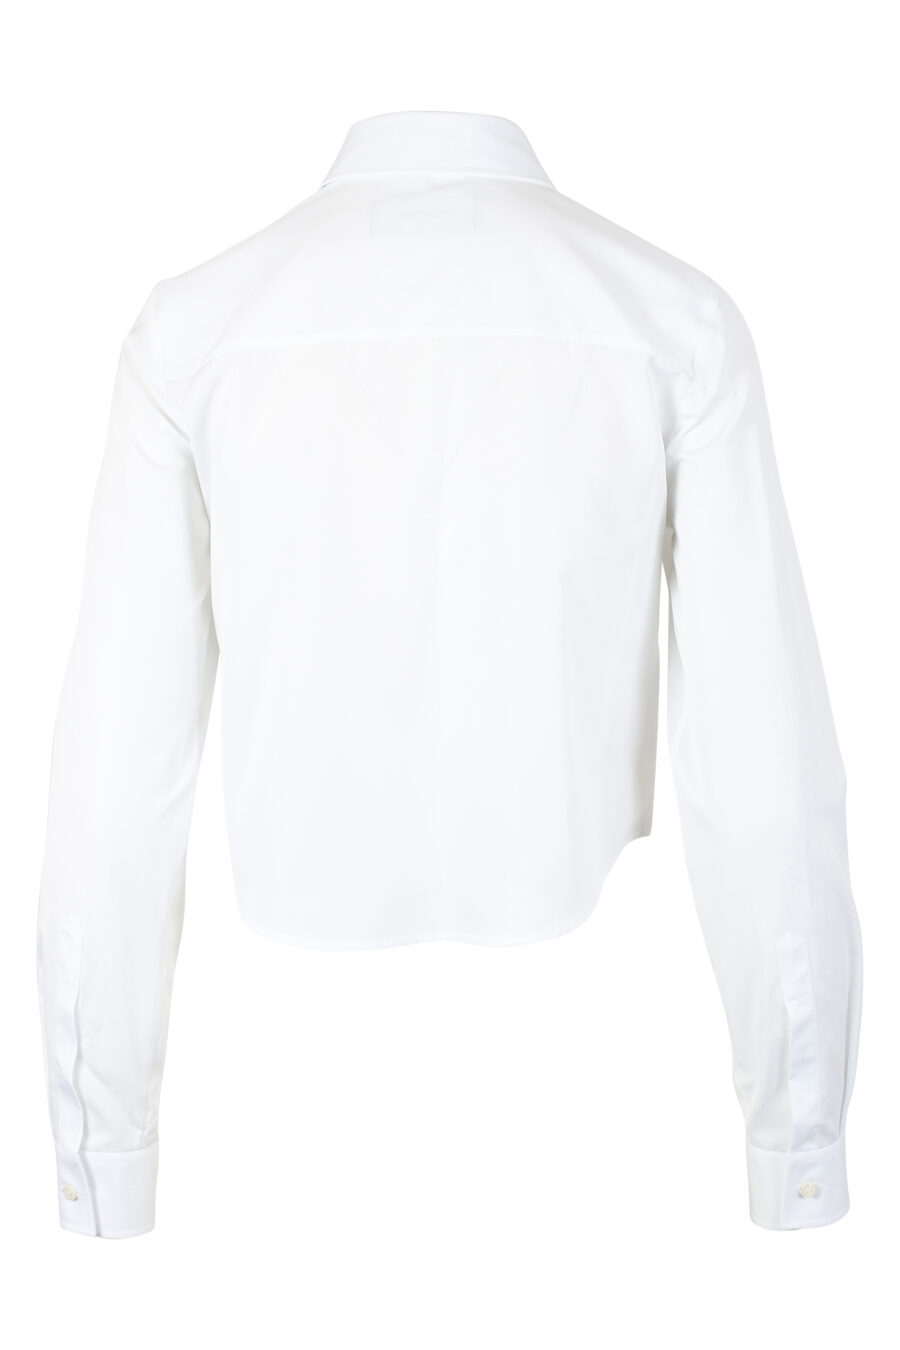 Camisa blanca corta con minilogo doble icon - IMG 9794